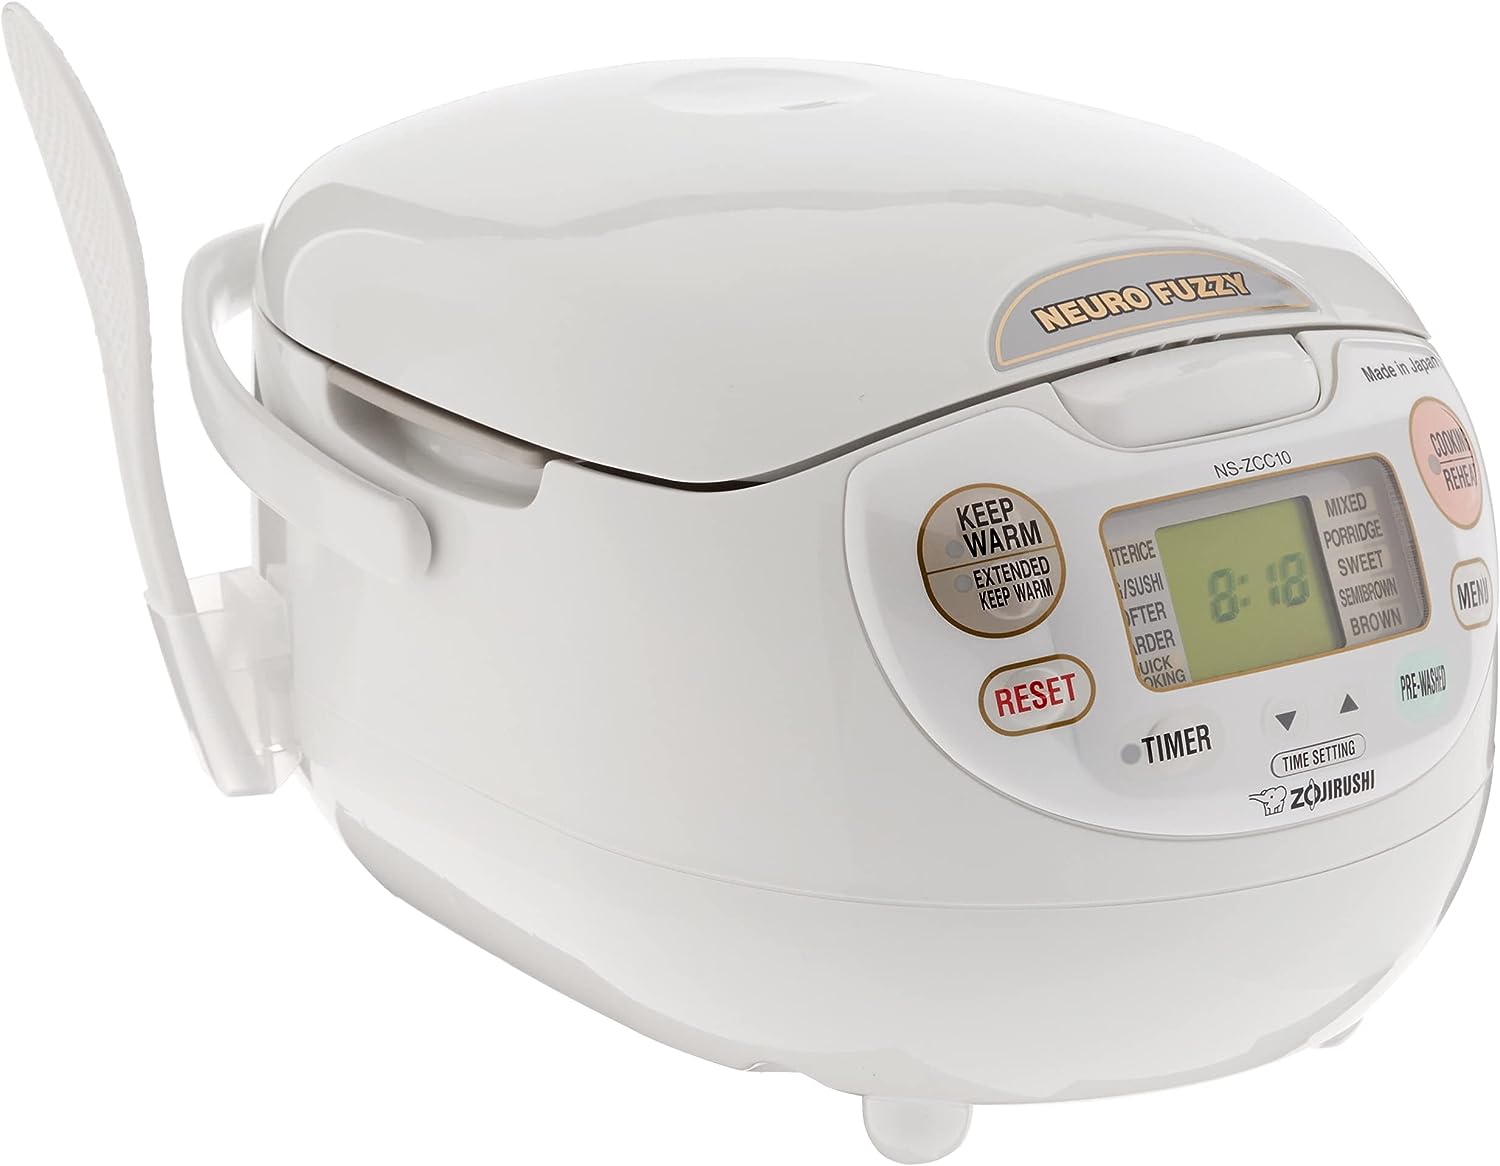 Zojirushi NS-ZCC10 5-1/2-Cup Neuro Fuzzy Rice Cooker and Warmer, Premium White $179.99 @ Amazon